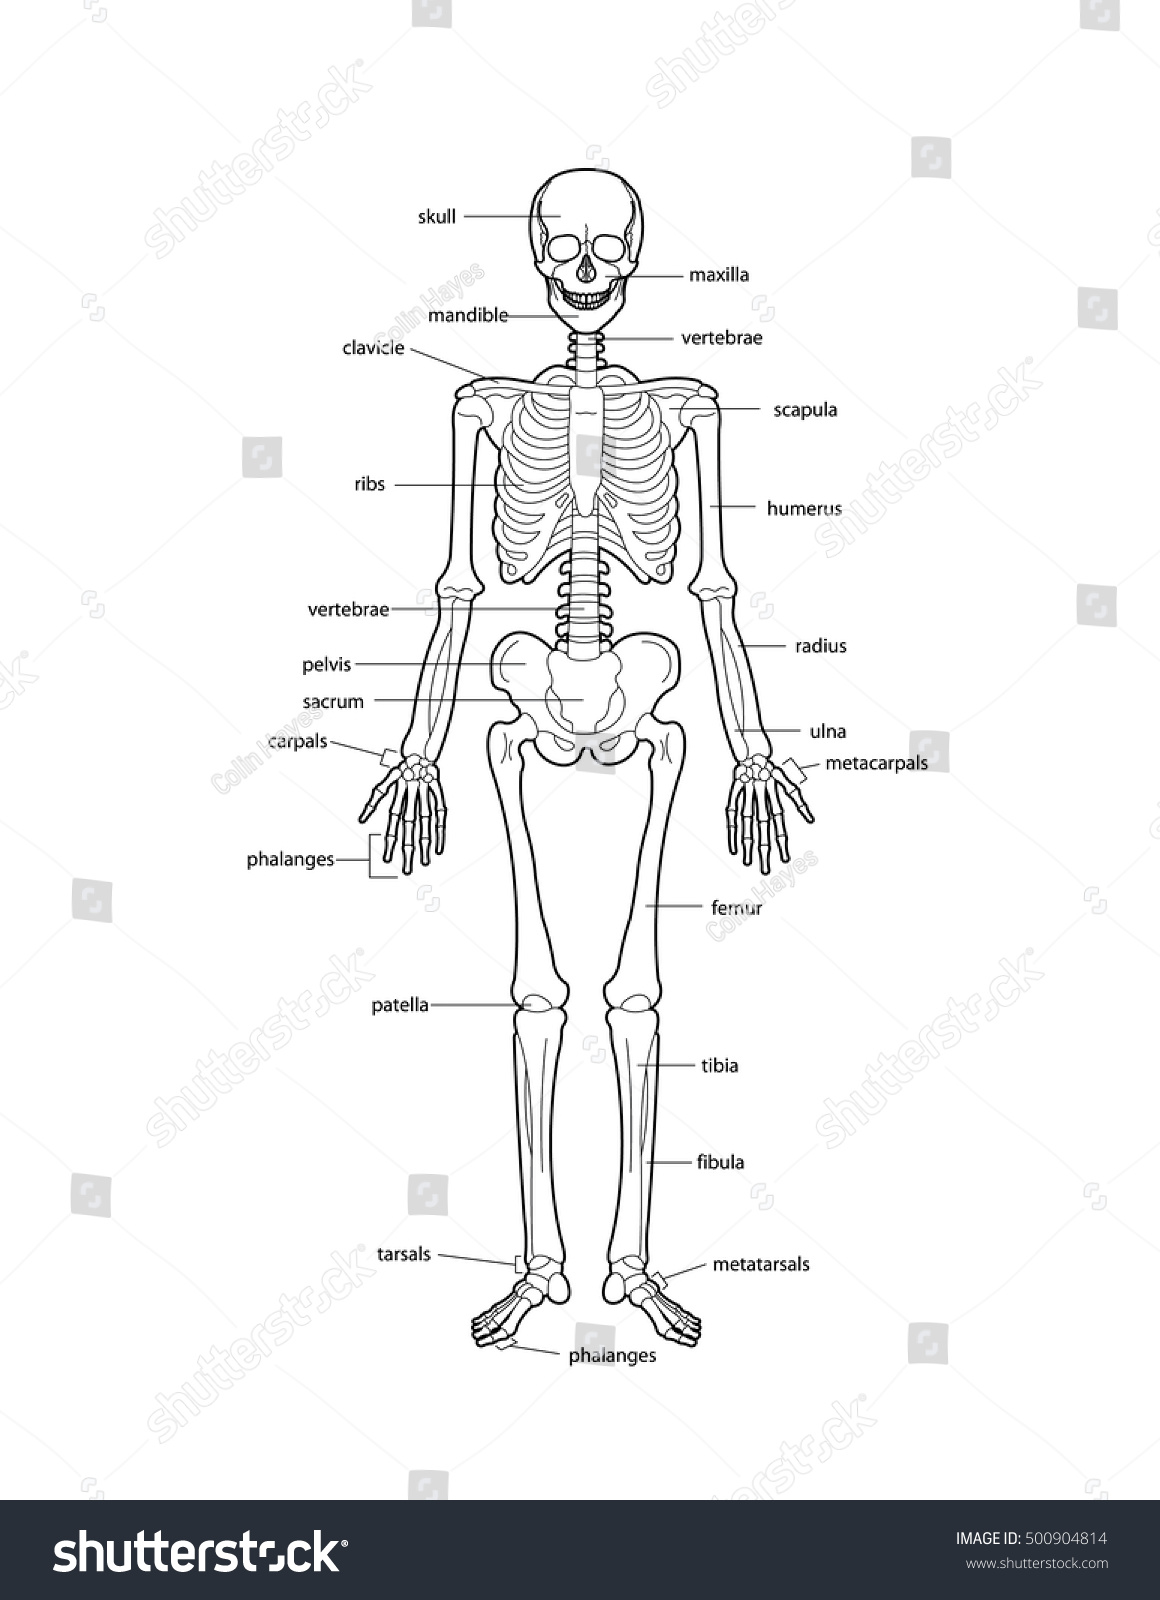 Human Skeleton Bones Labeled Stock Vector 500904814 ...